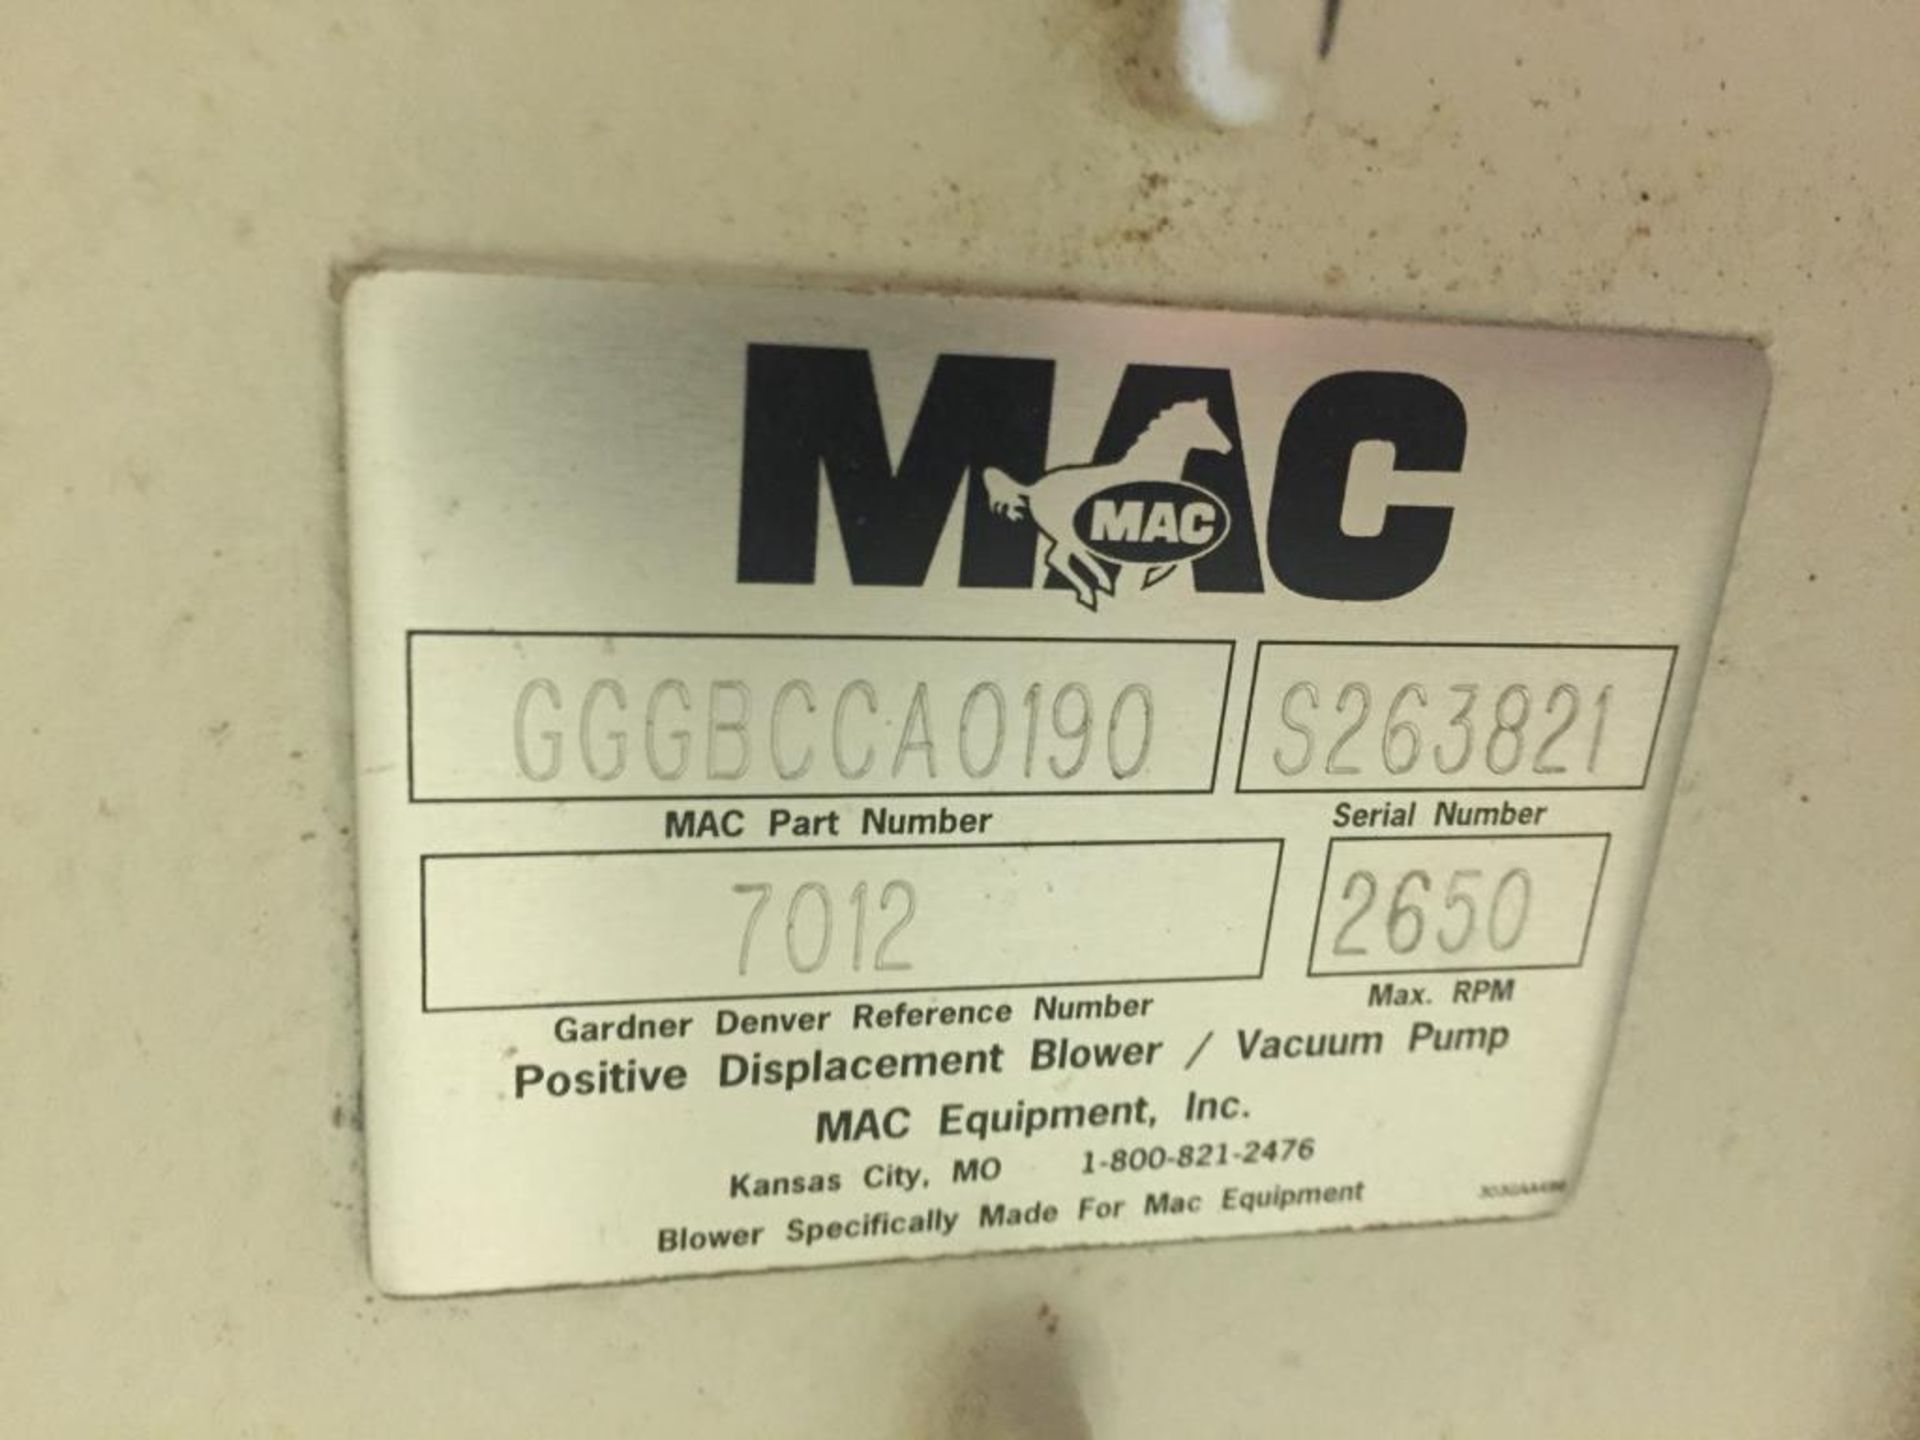 MAC Blower Package Model GGGBCCA0190 S/N S263821 GD REF # 7012 MAX RPM 2650 50HP - Image 4 of 5